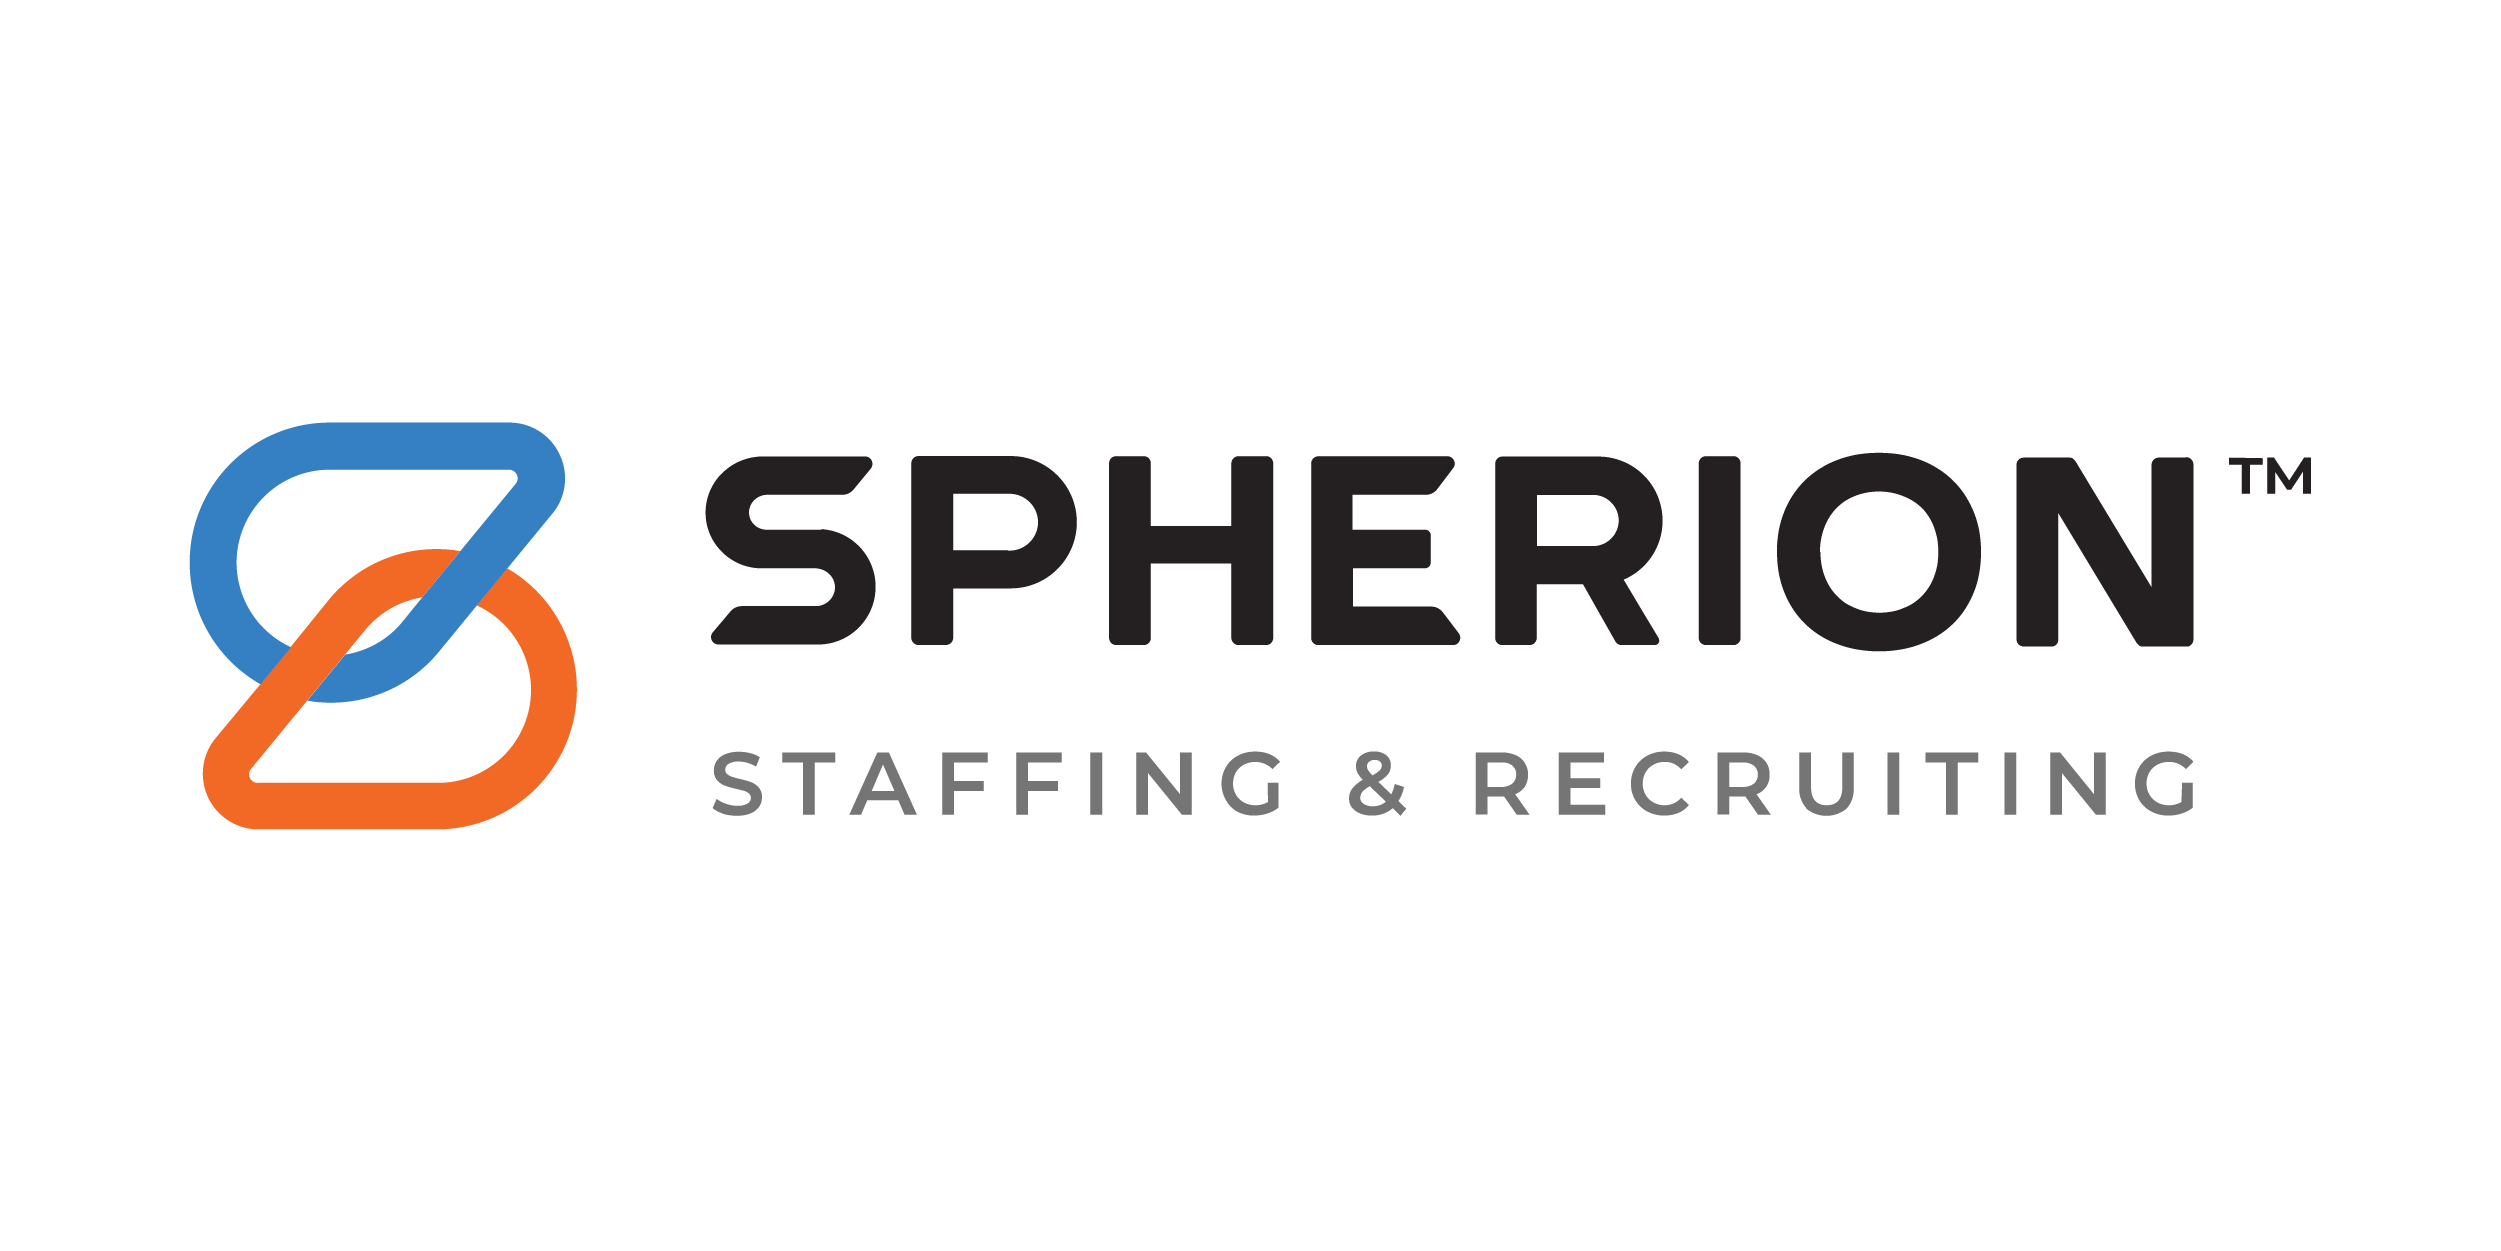 Spherion Staffing & Recruiting Logo